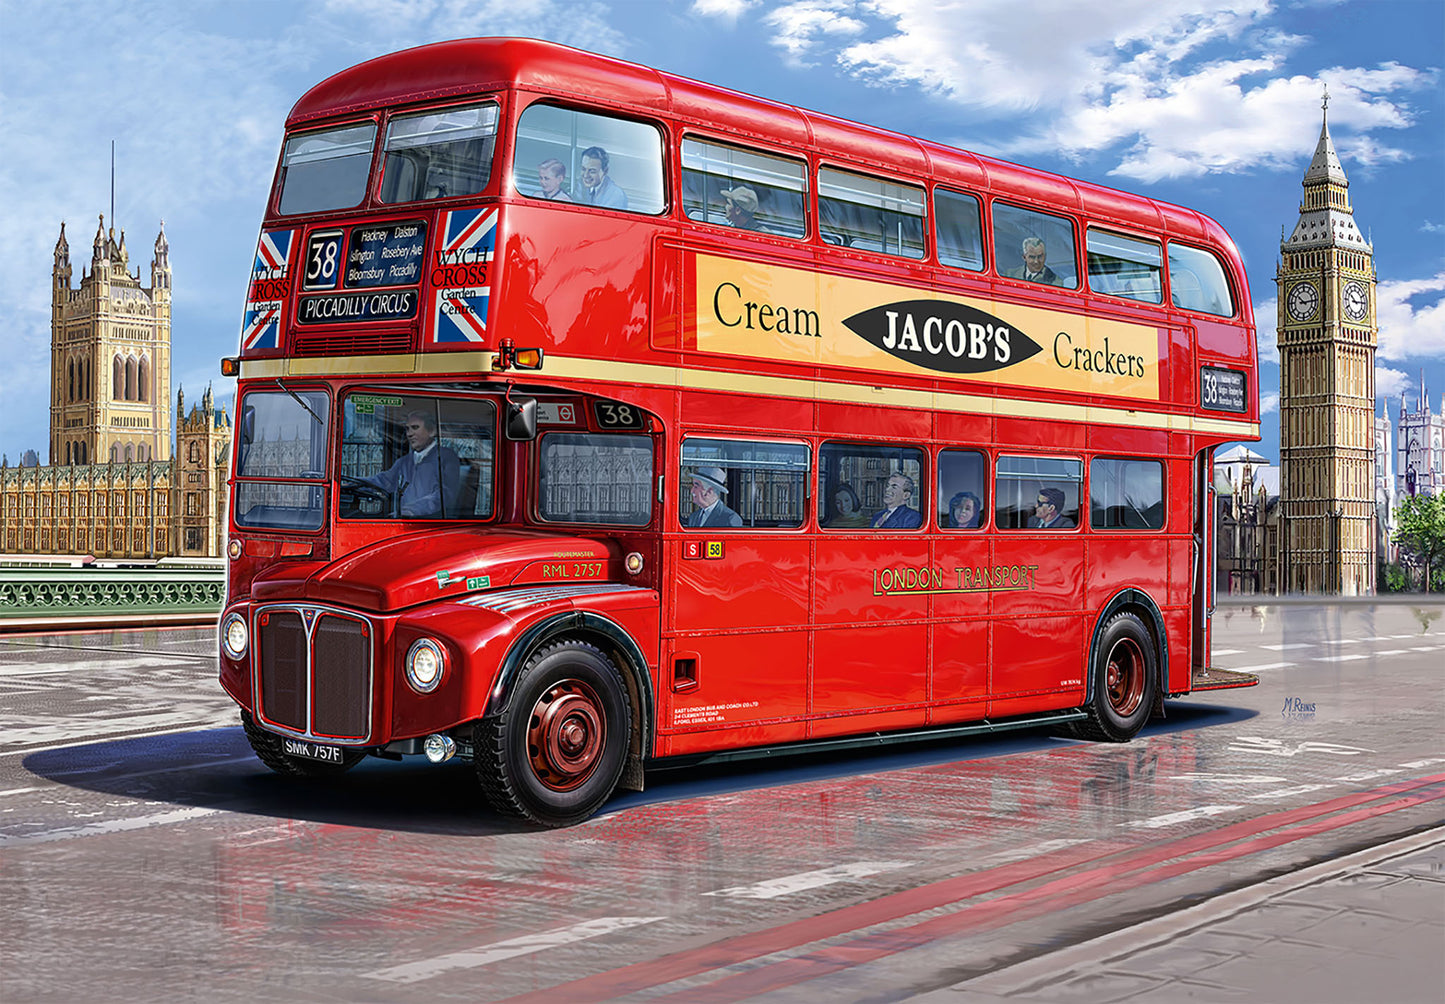 Revell 1/24th scale Platinum Edition AEC Routemaster London Bus